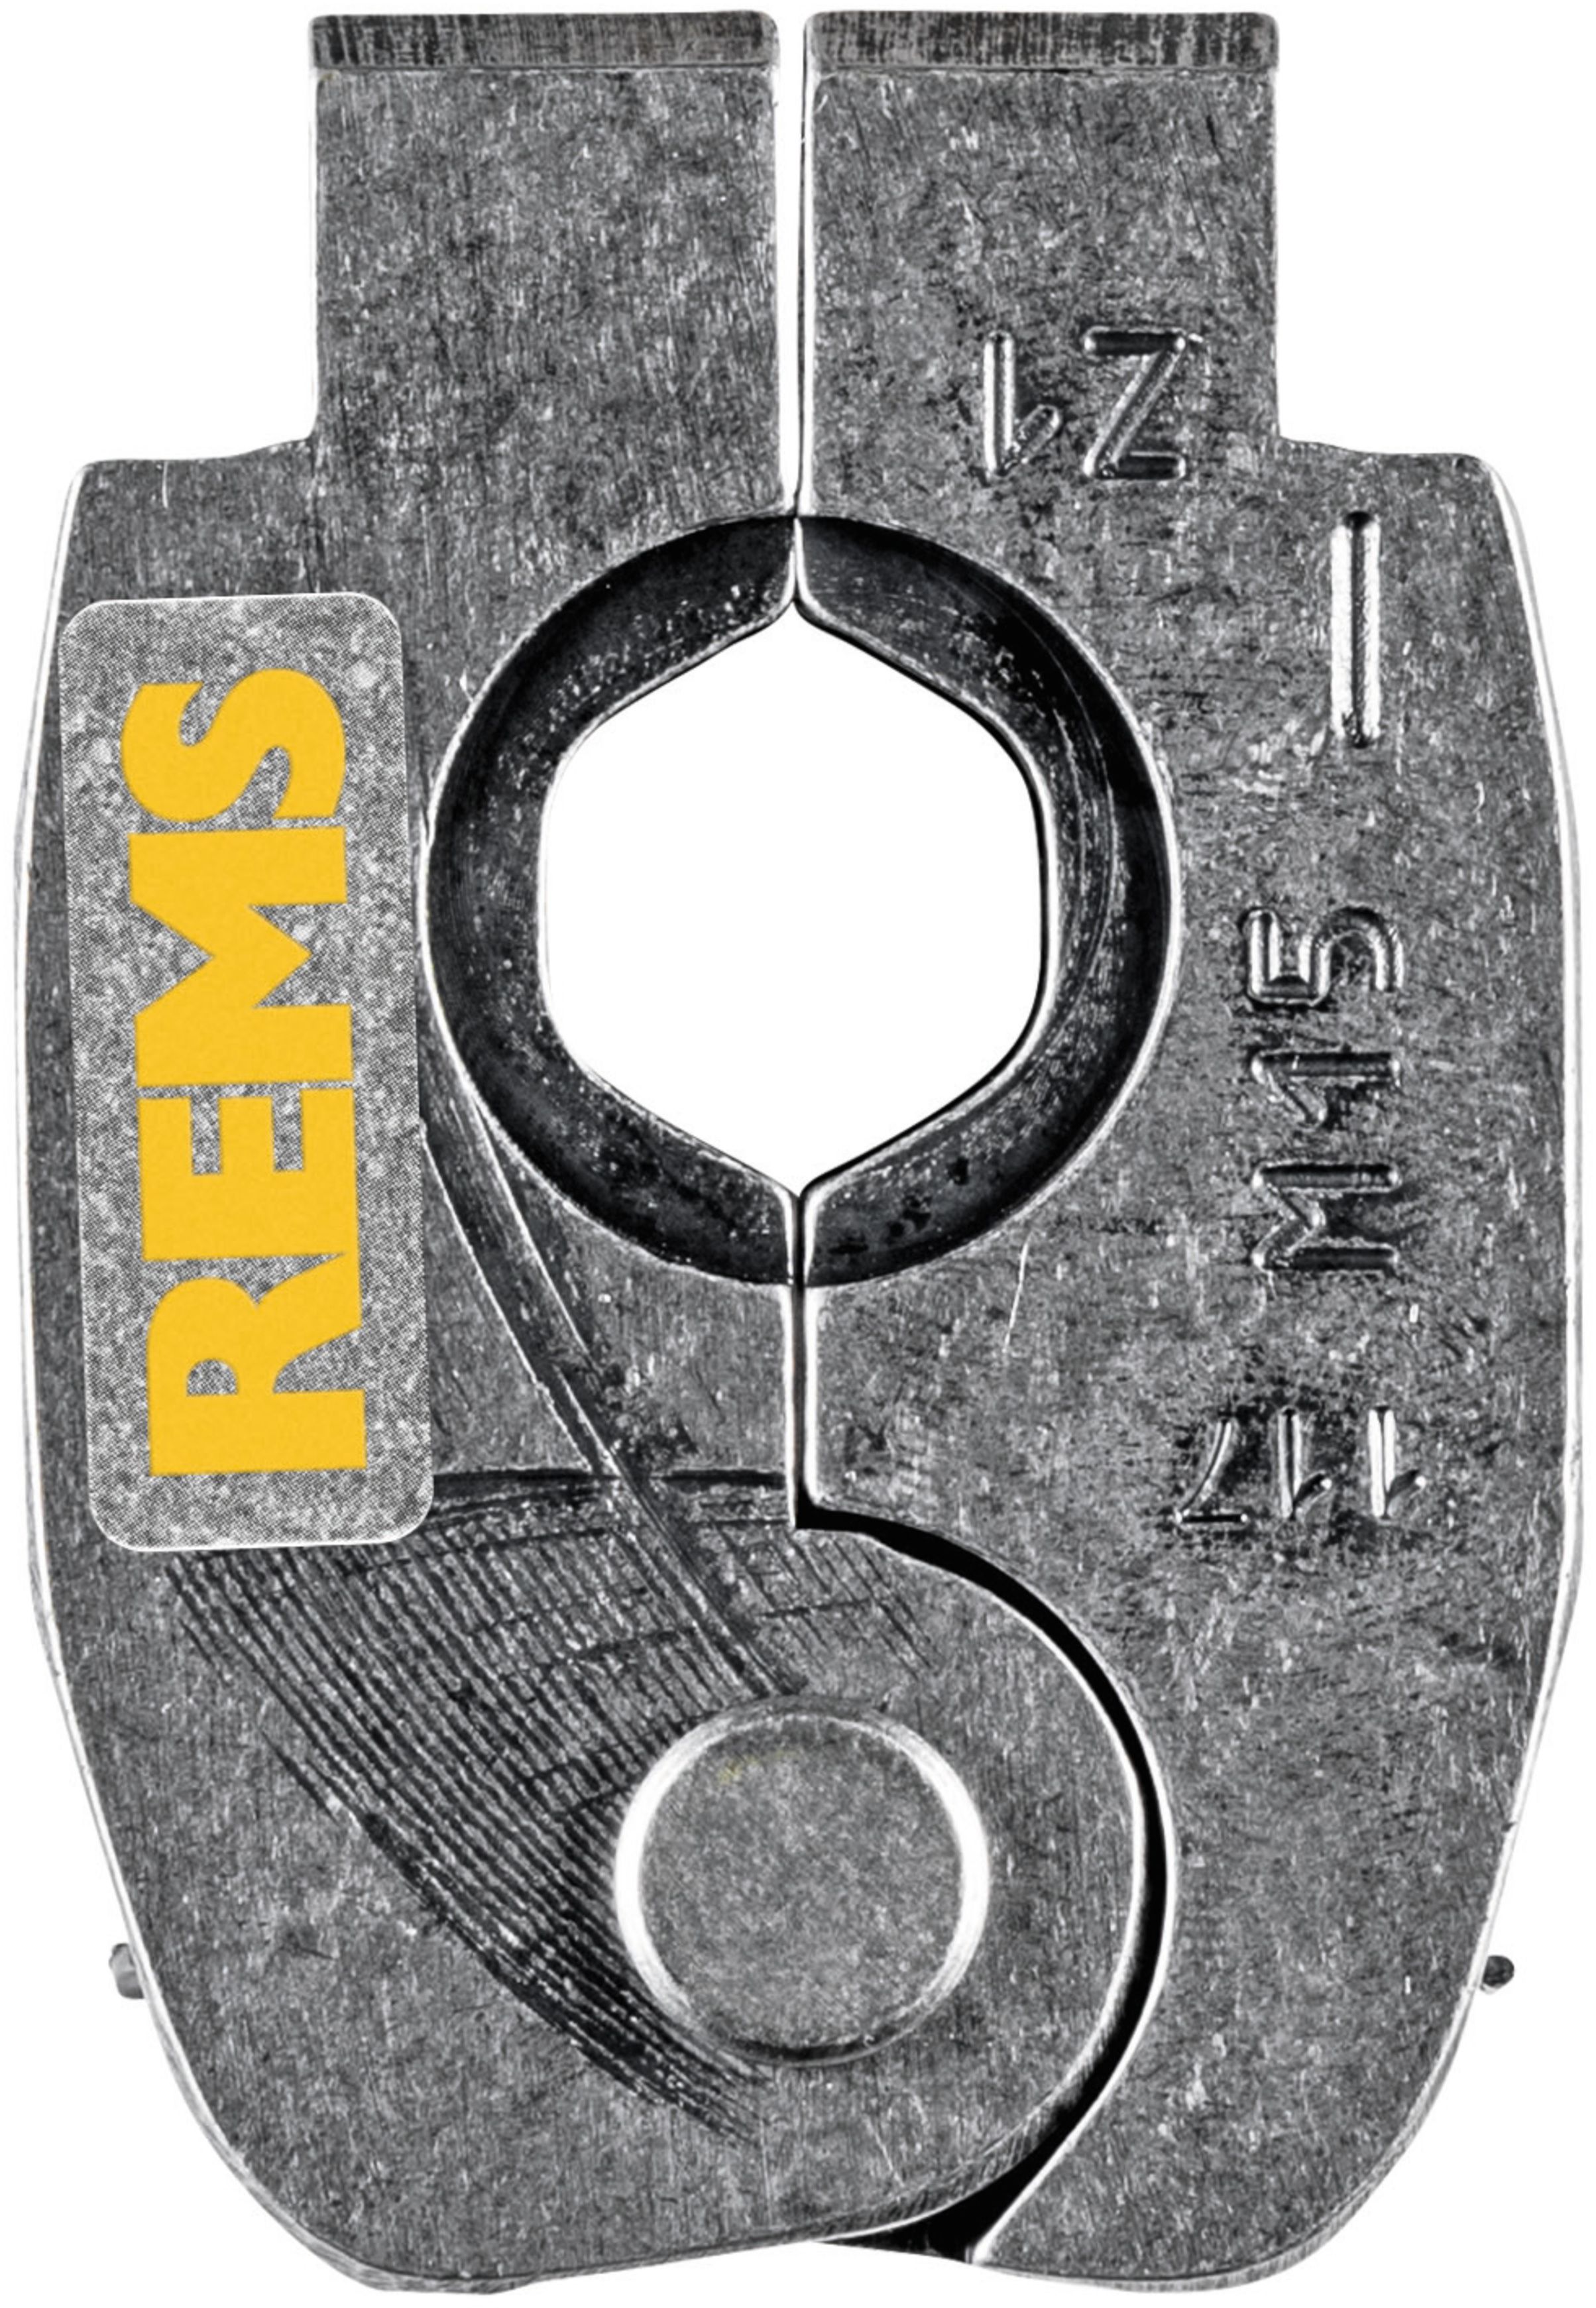 REMS PRESSRING M 35 45° (PR-2B) 574530 R, für Mini-Press ACC - Sanitärwerkzeuge